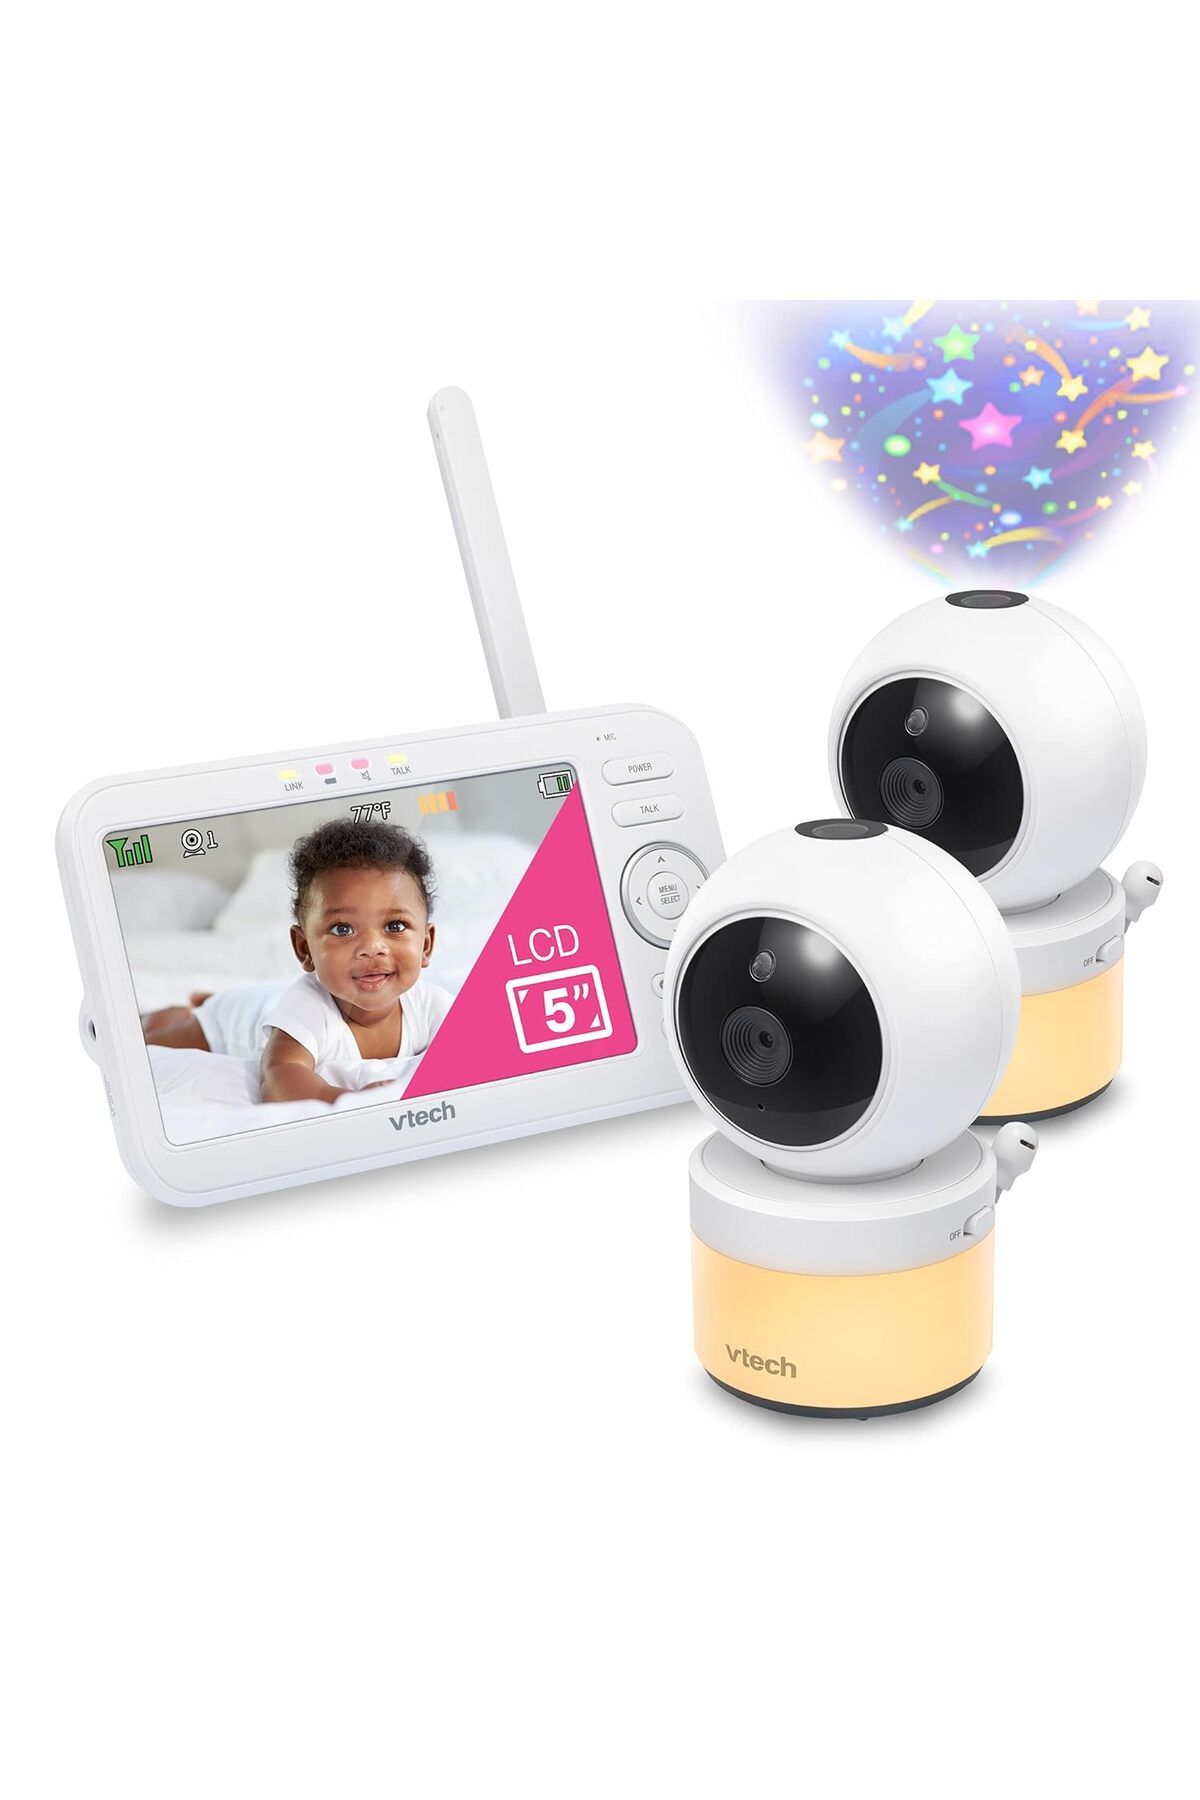 VTech Baby VTech VM5463-2 Video Bebek Monitörü 720p 5 Inc LCD Ekran, 2 Kameralı